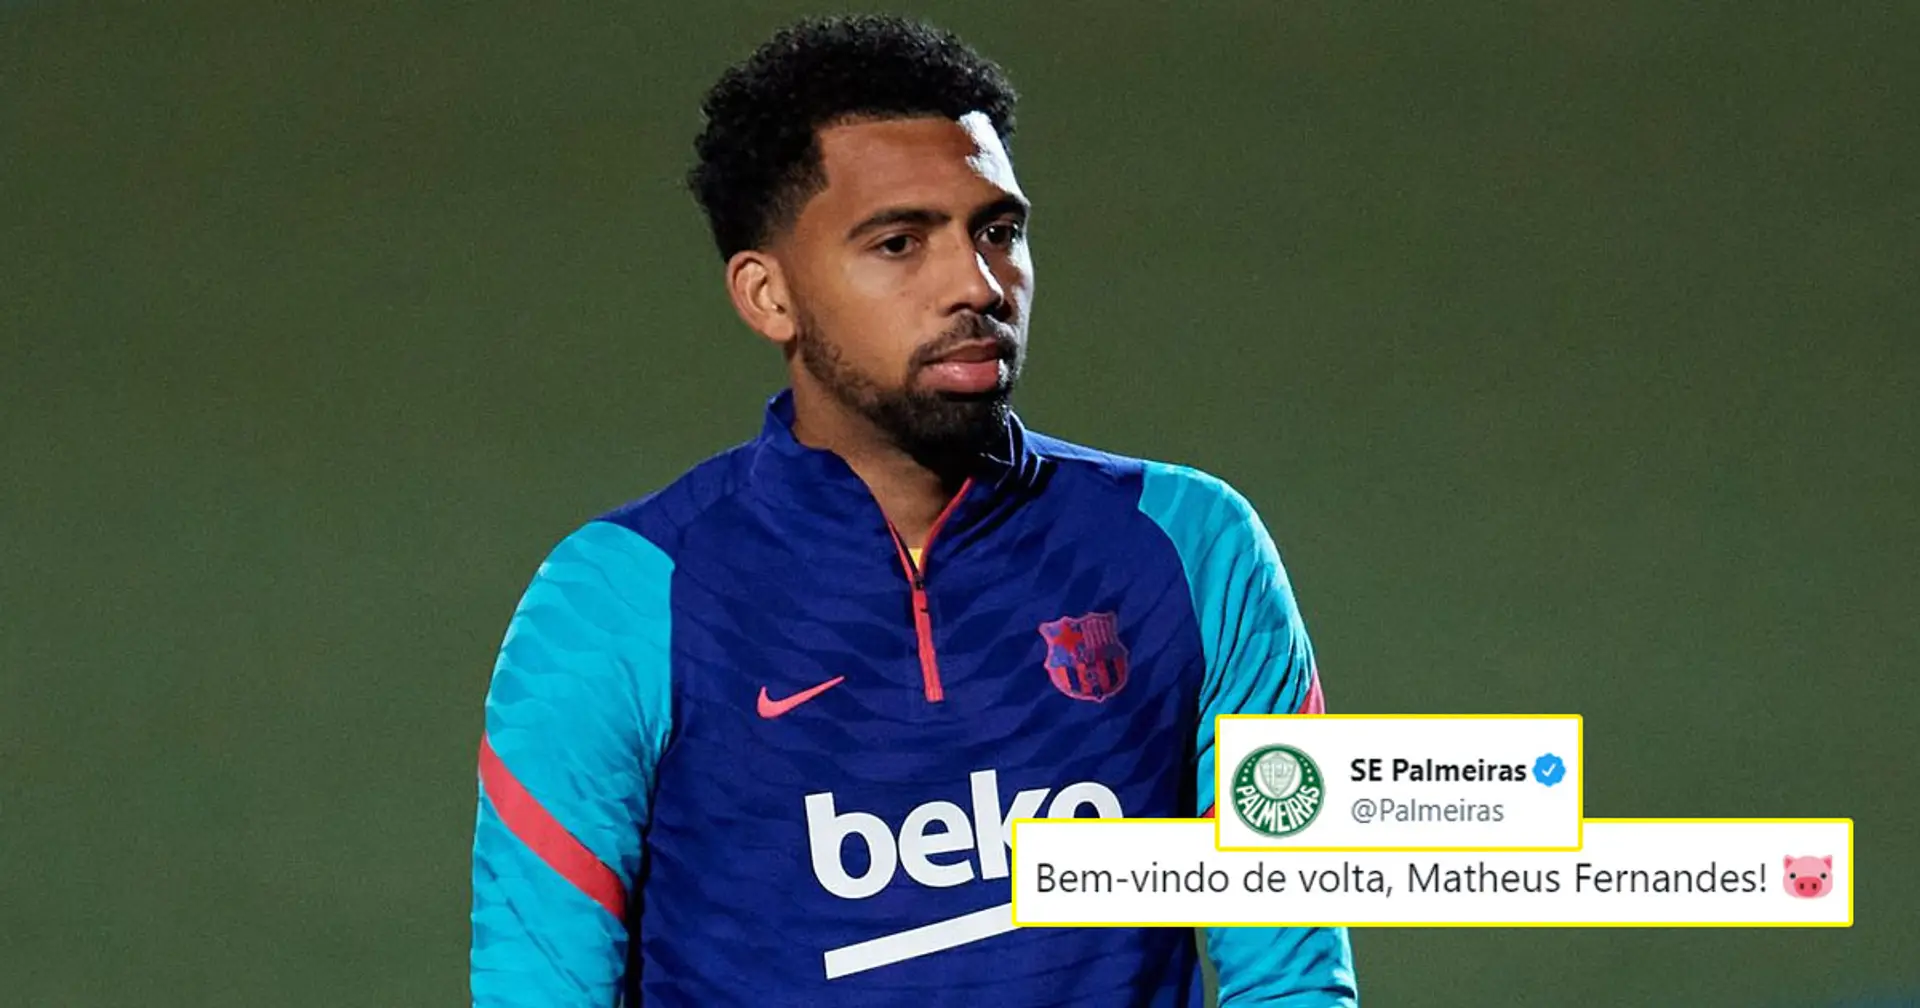 OFFICIAL: Matheus Fernandes returns to Palmeiras after Barca contract termination